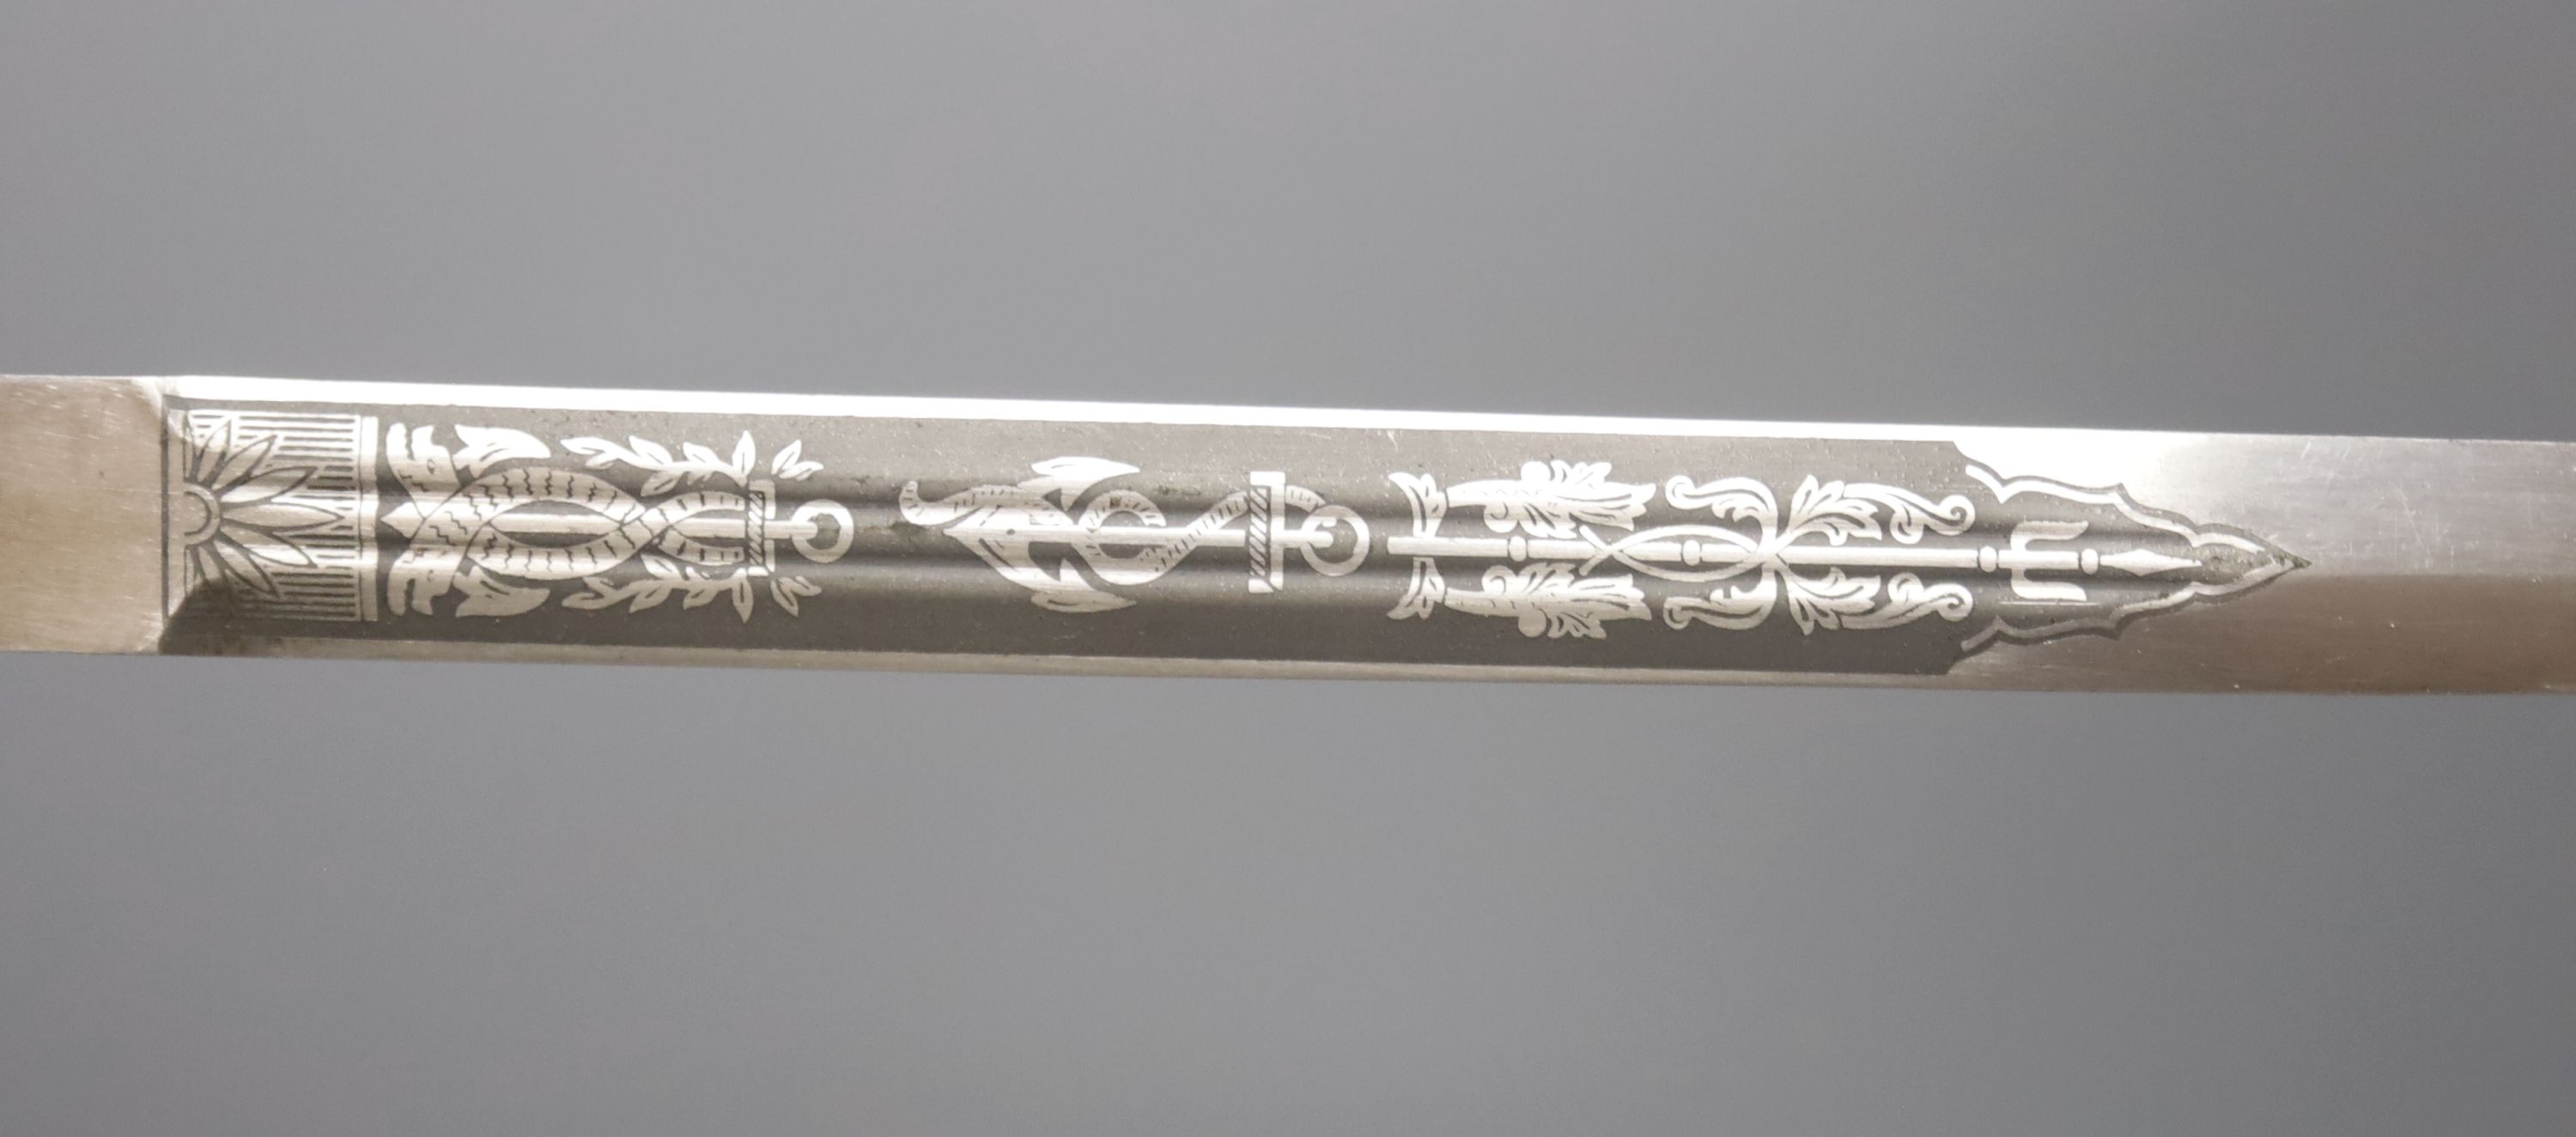 A re-enactors Kreigsmarine dress ceremonial dagger, with brass scabbard, 42cm long